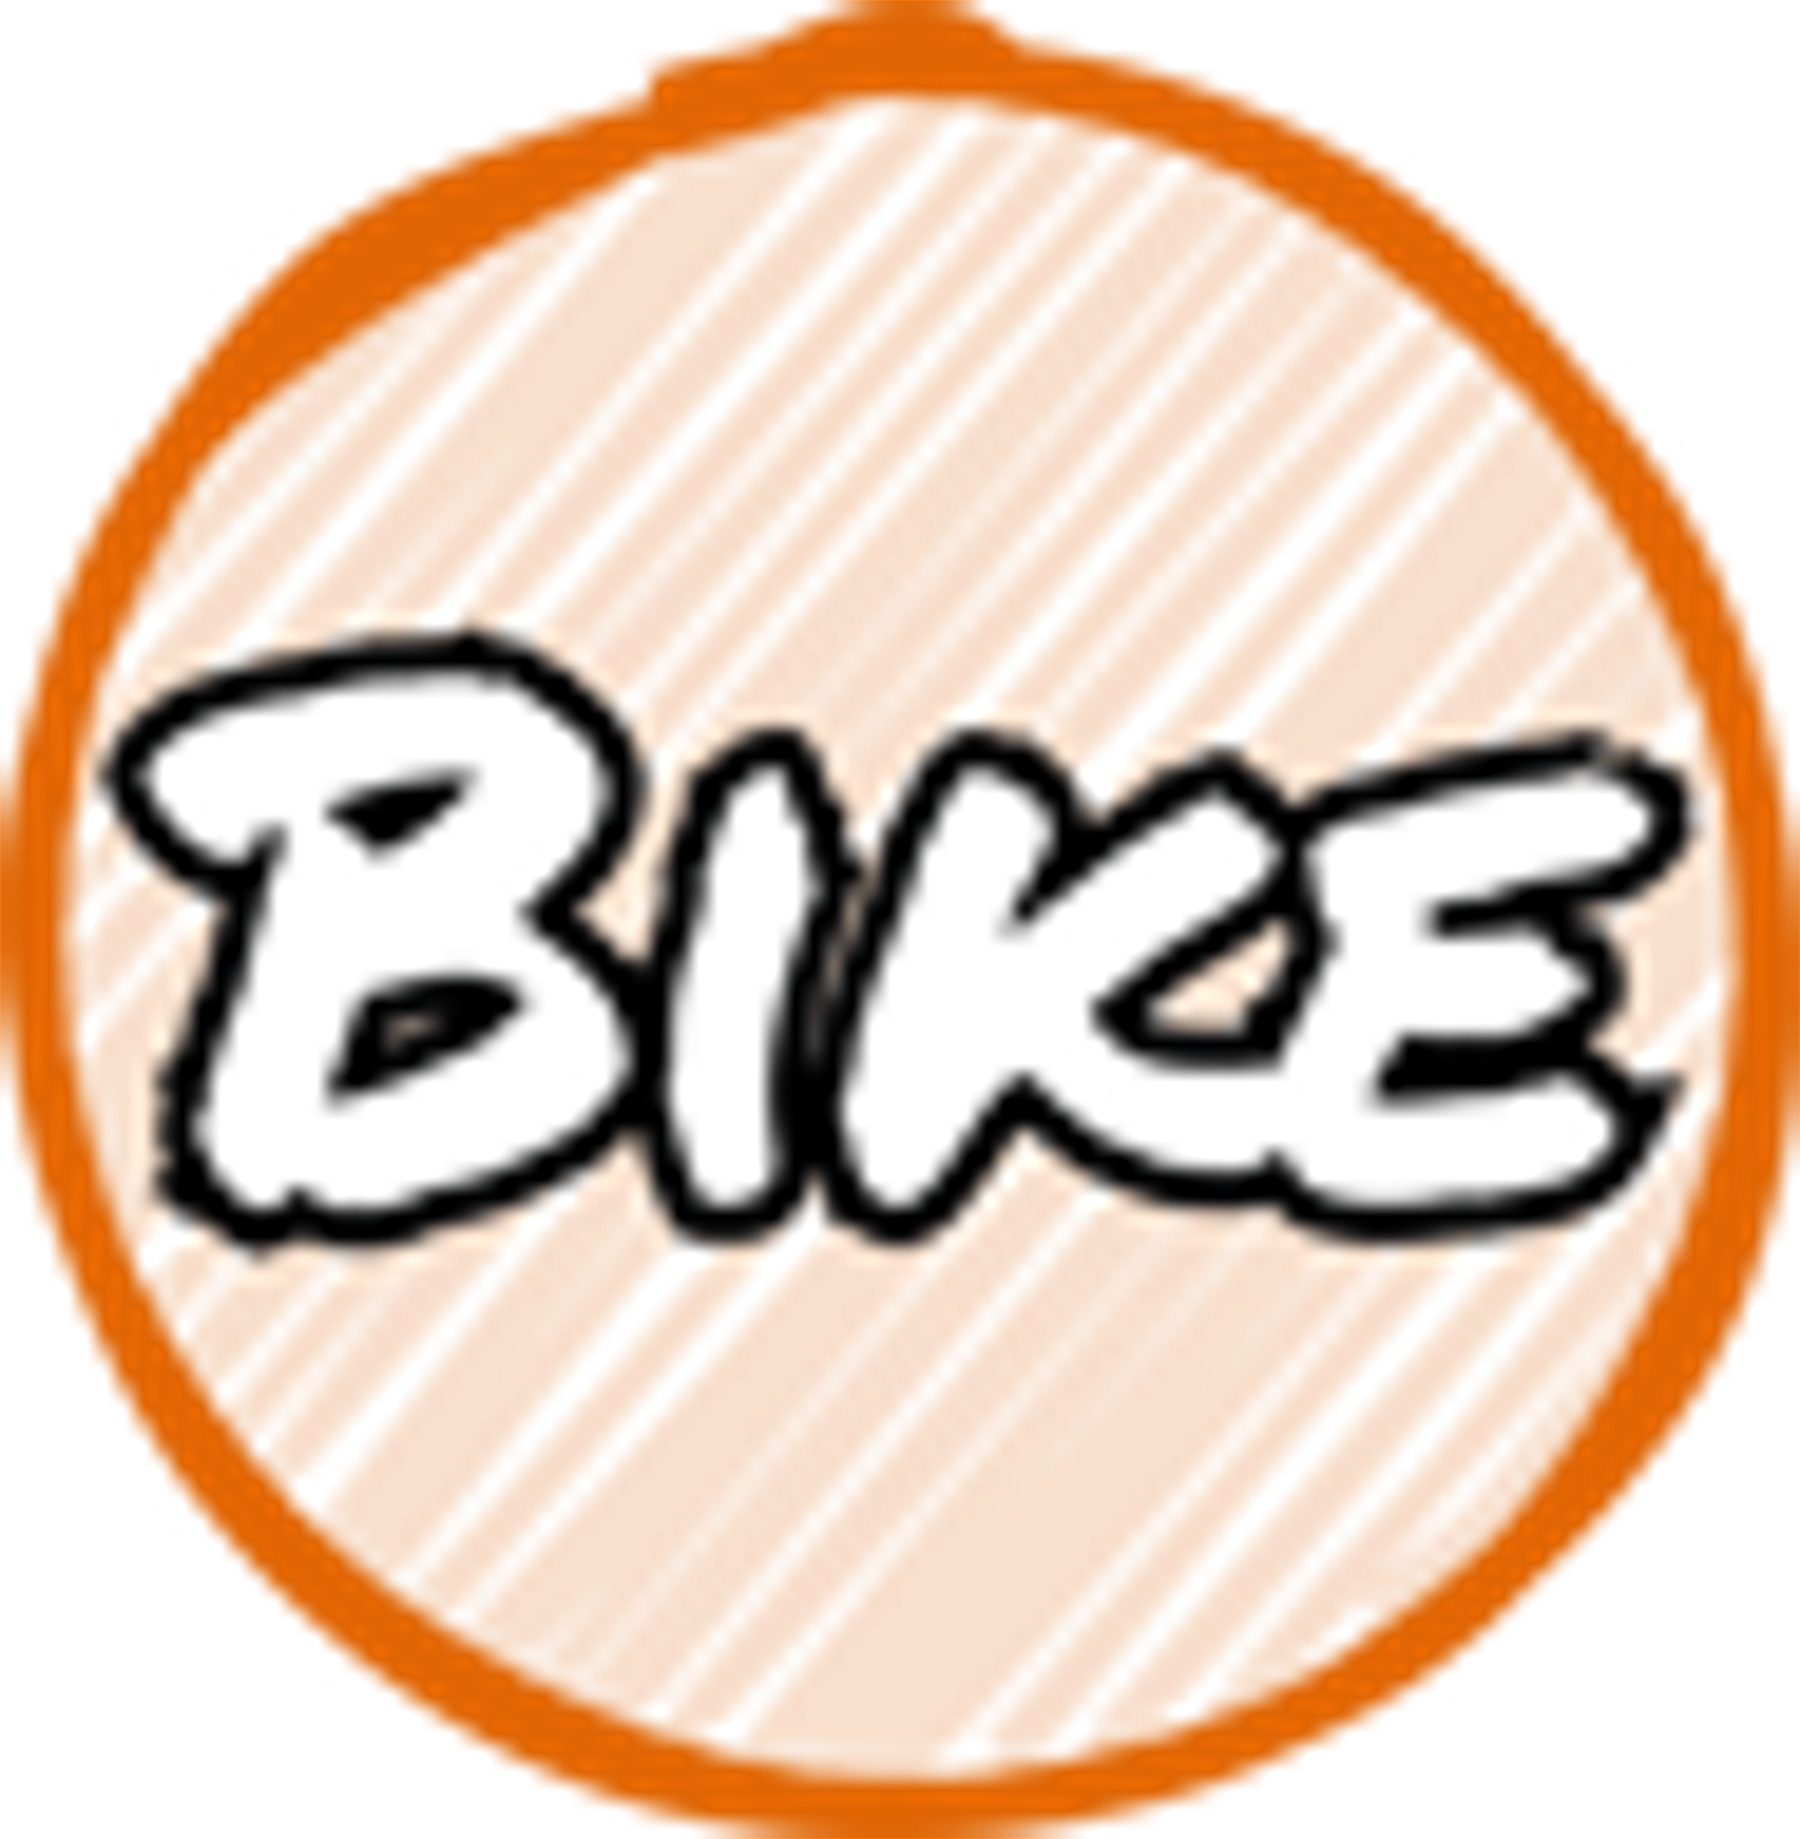 Bike Blog from AnyEvery.org